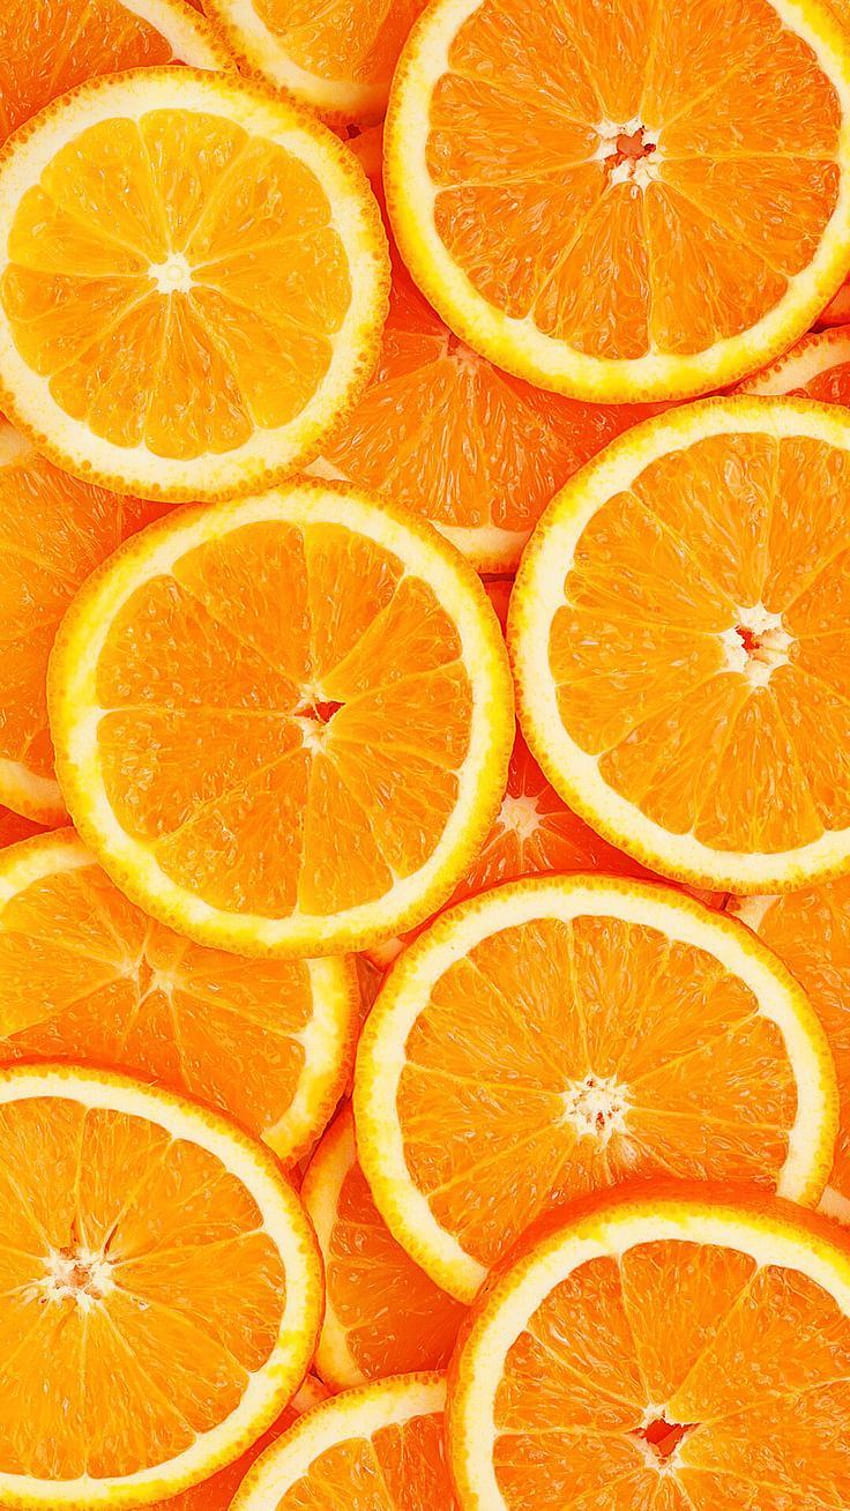 Orange Fruit Photos Download The BEST Free Orange Fruit Stock Photos  HD  Images